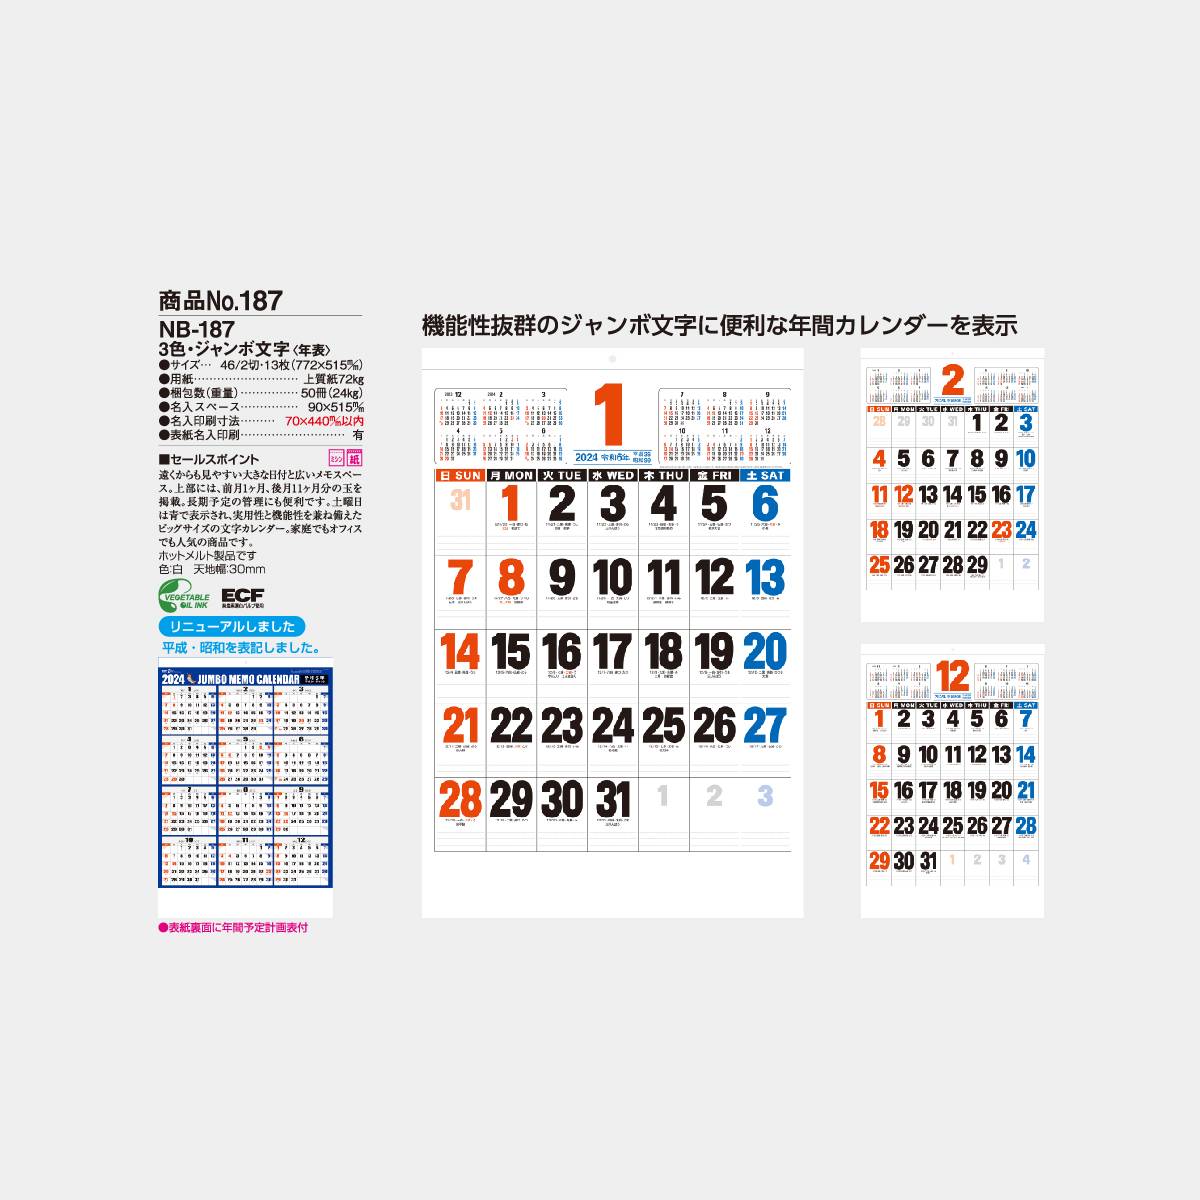 NB-187 3色ジャンボ文字(年表型) 2022年版の名入れカレンダーを格安で 